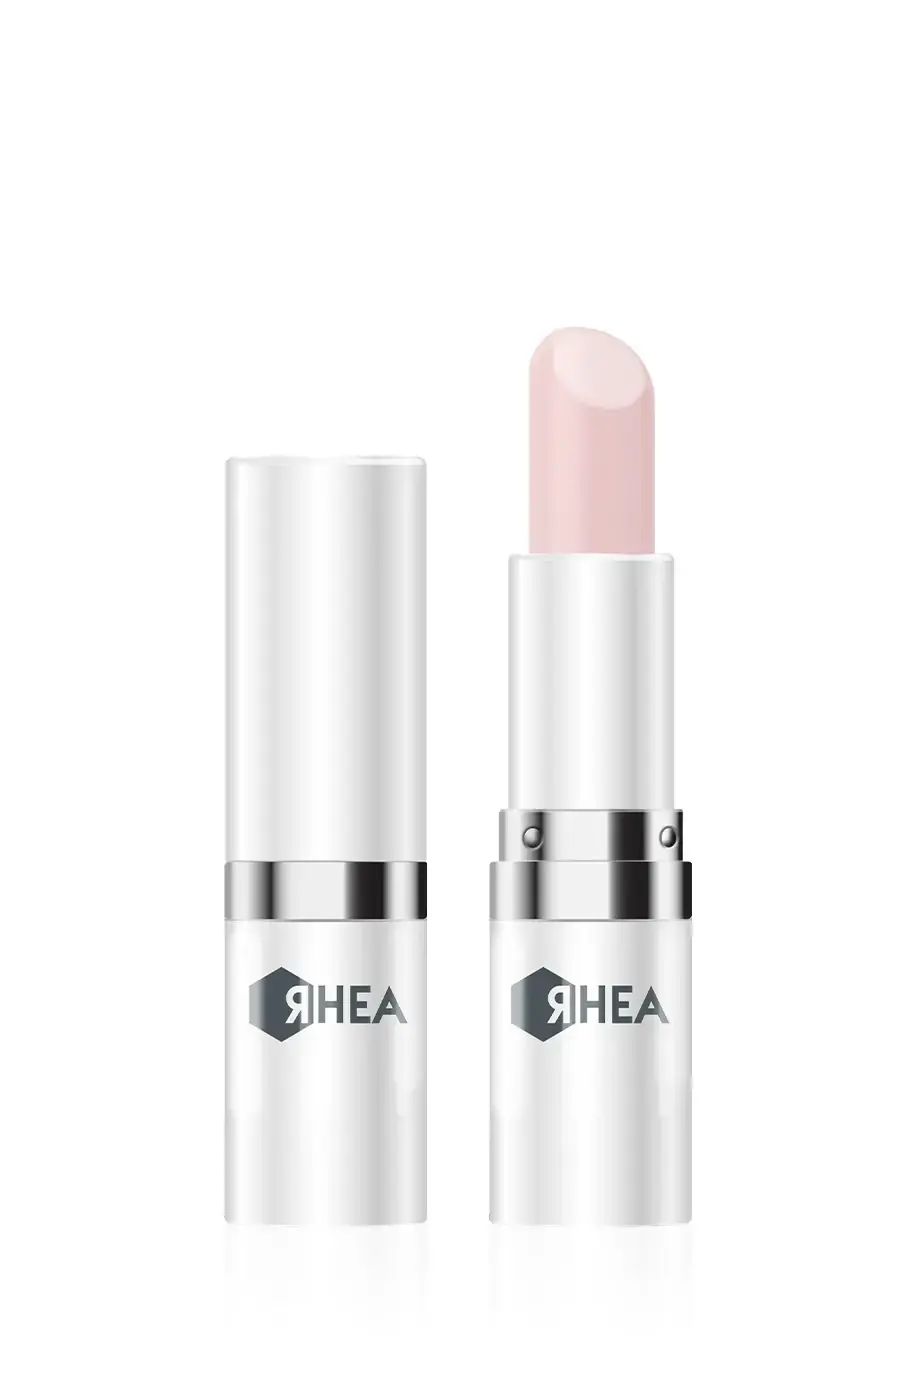 RHEA Cosmetics NutriKiss - Nourishing Lip Balm